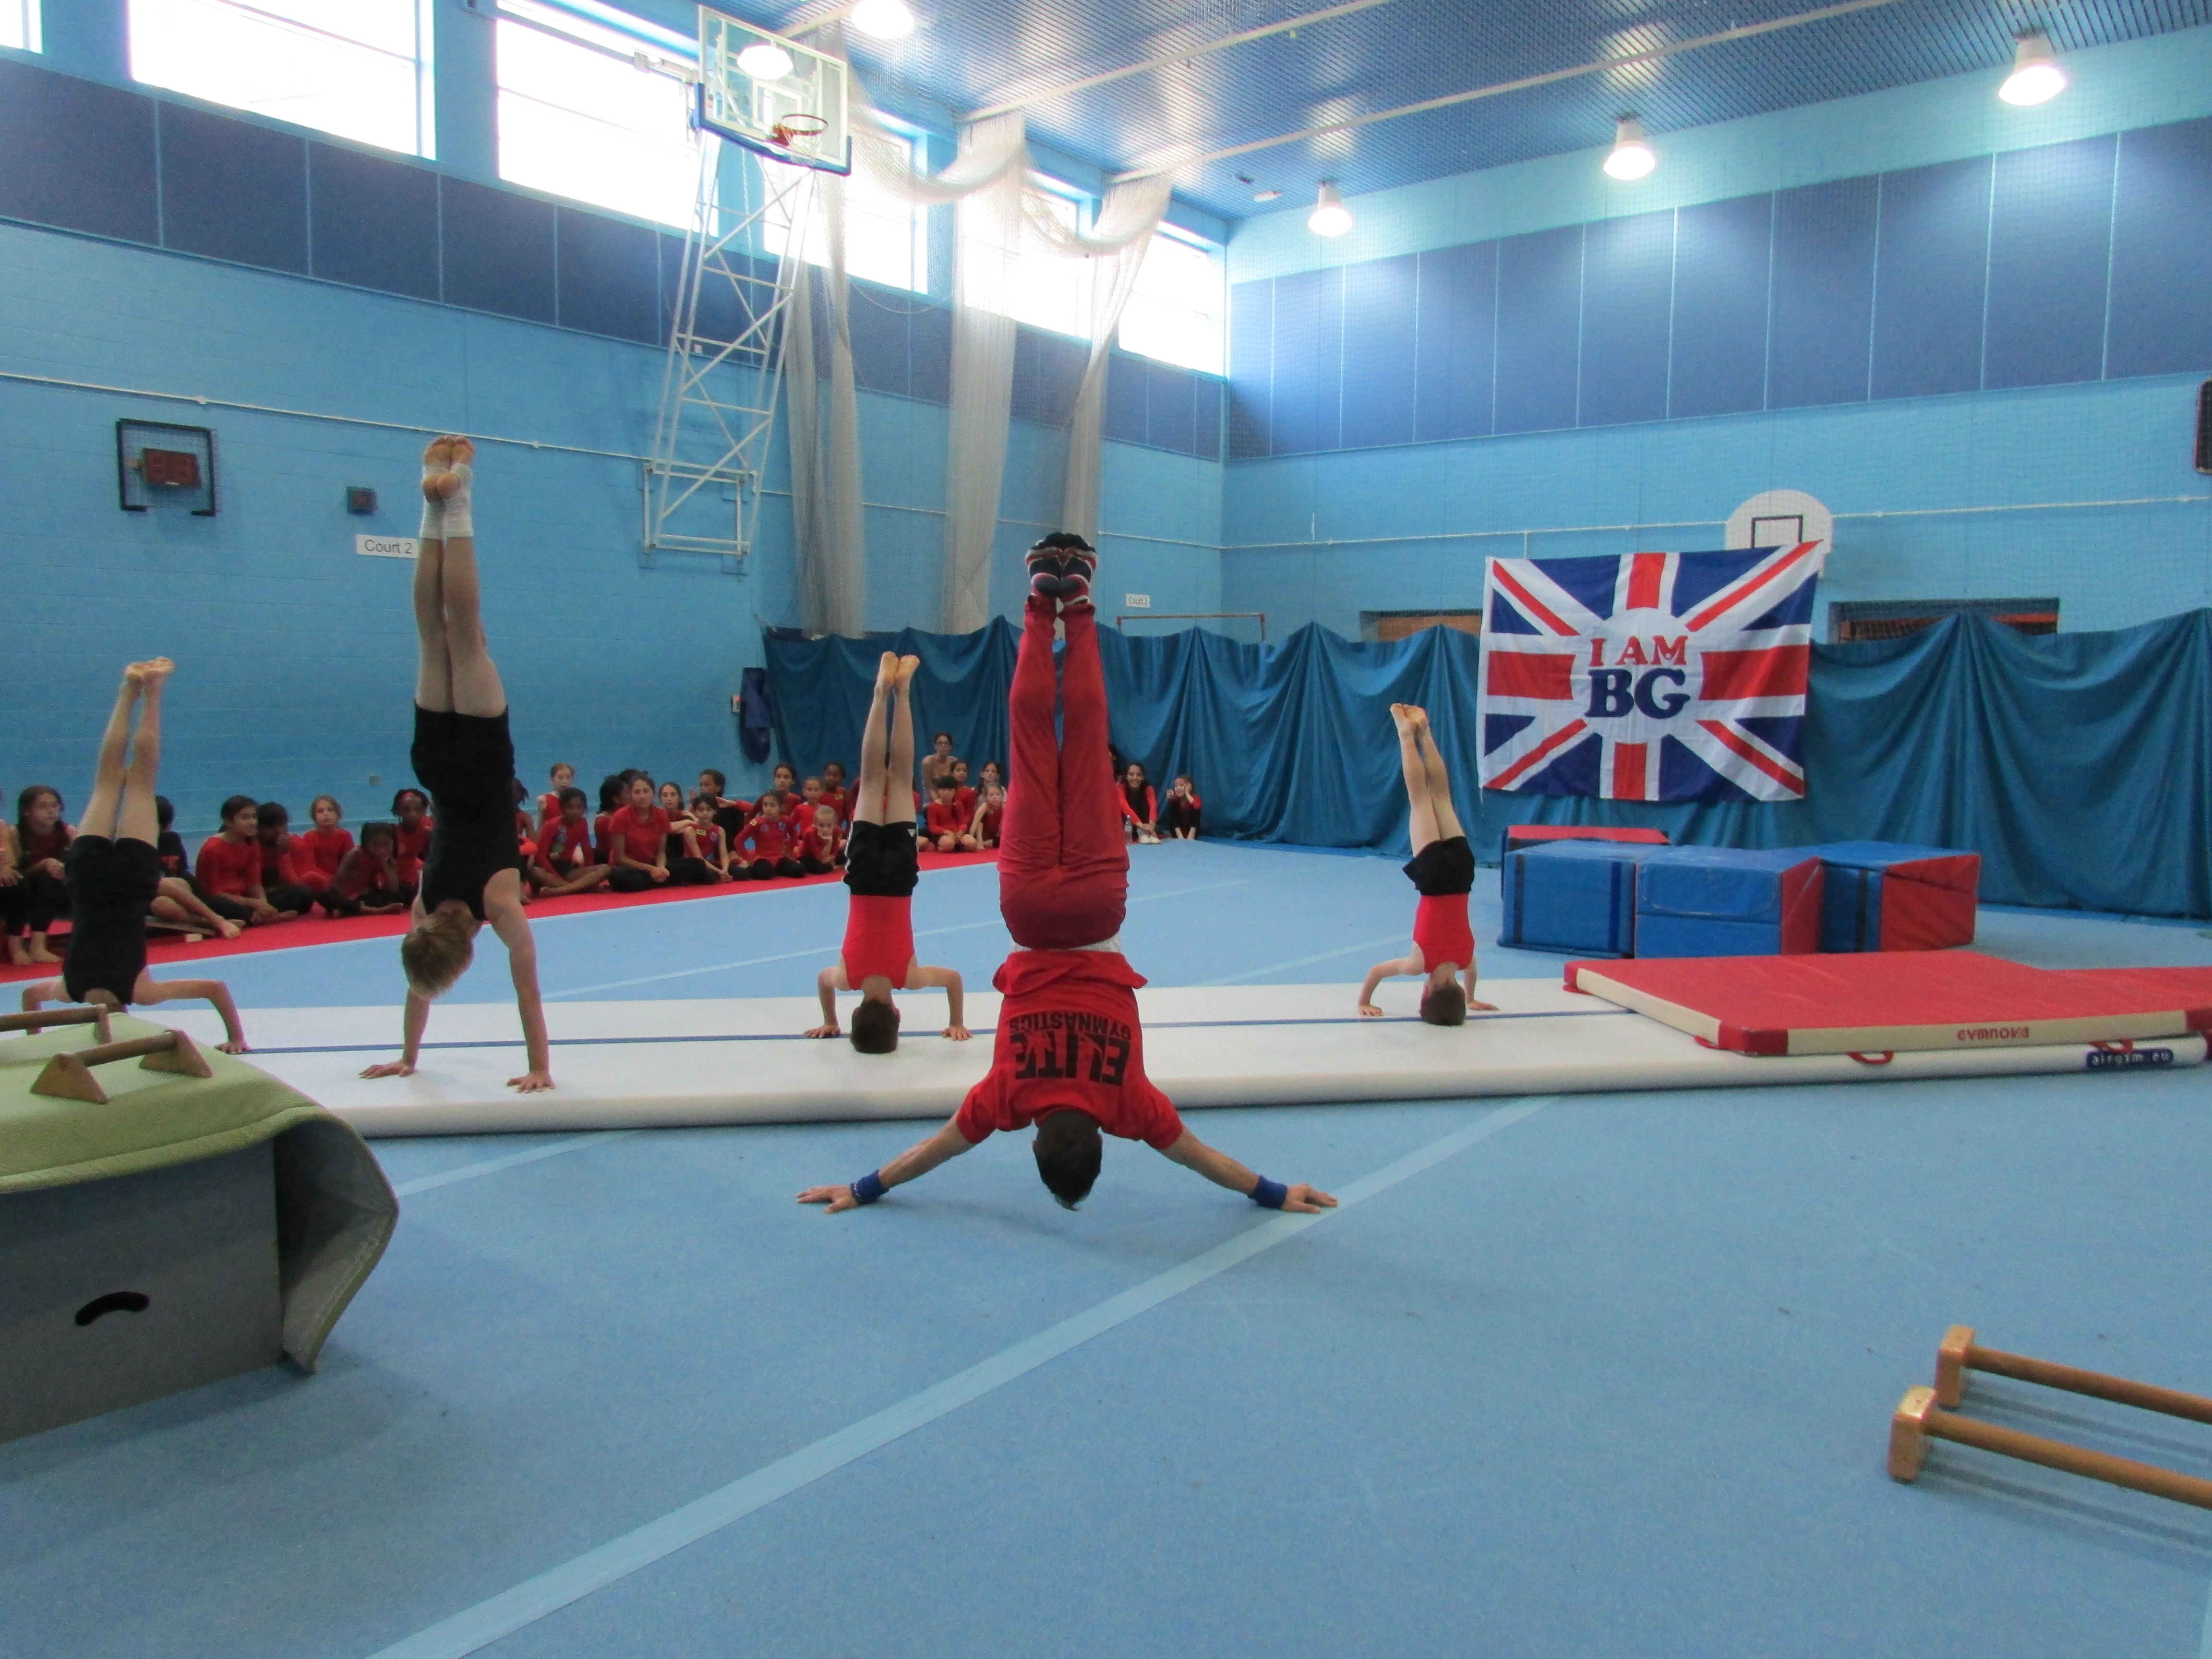 Gymnastics coaching in Edmonton Leisure Centre in London